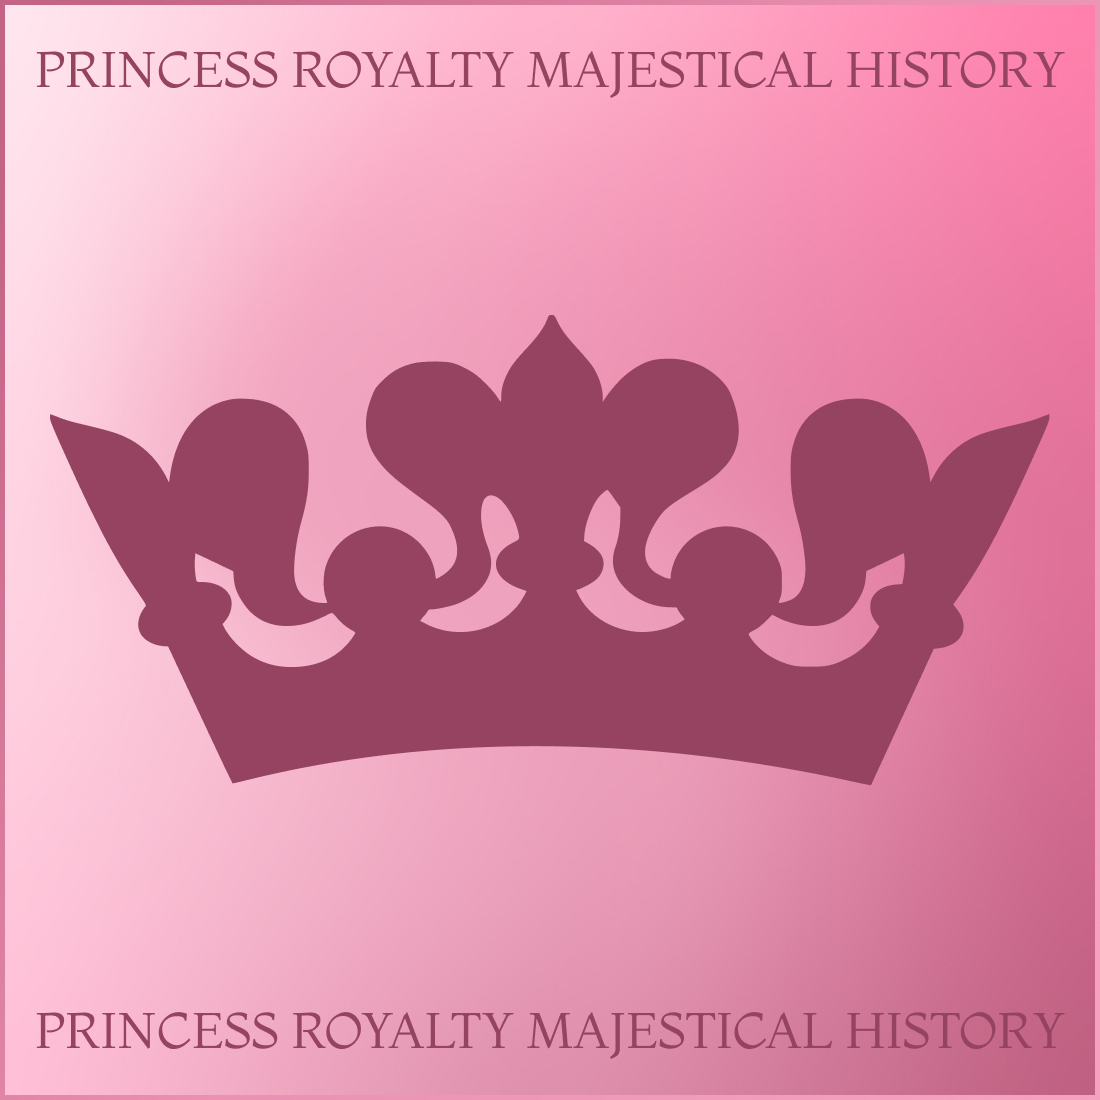 Princess Royalty Majestical History main cover.